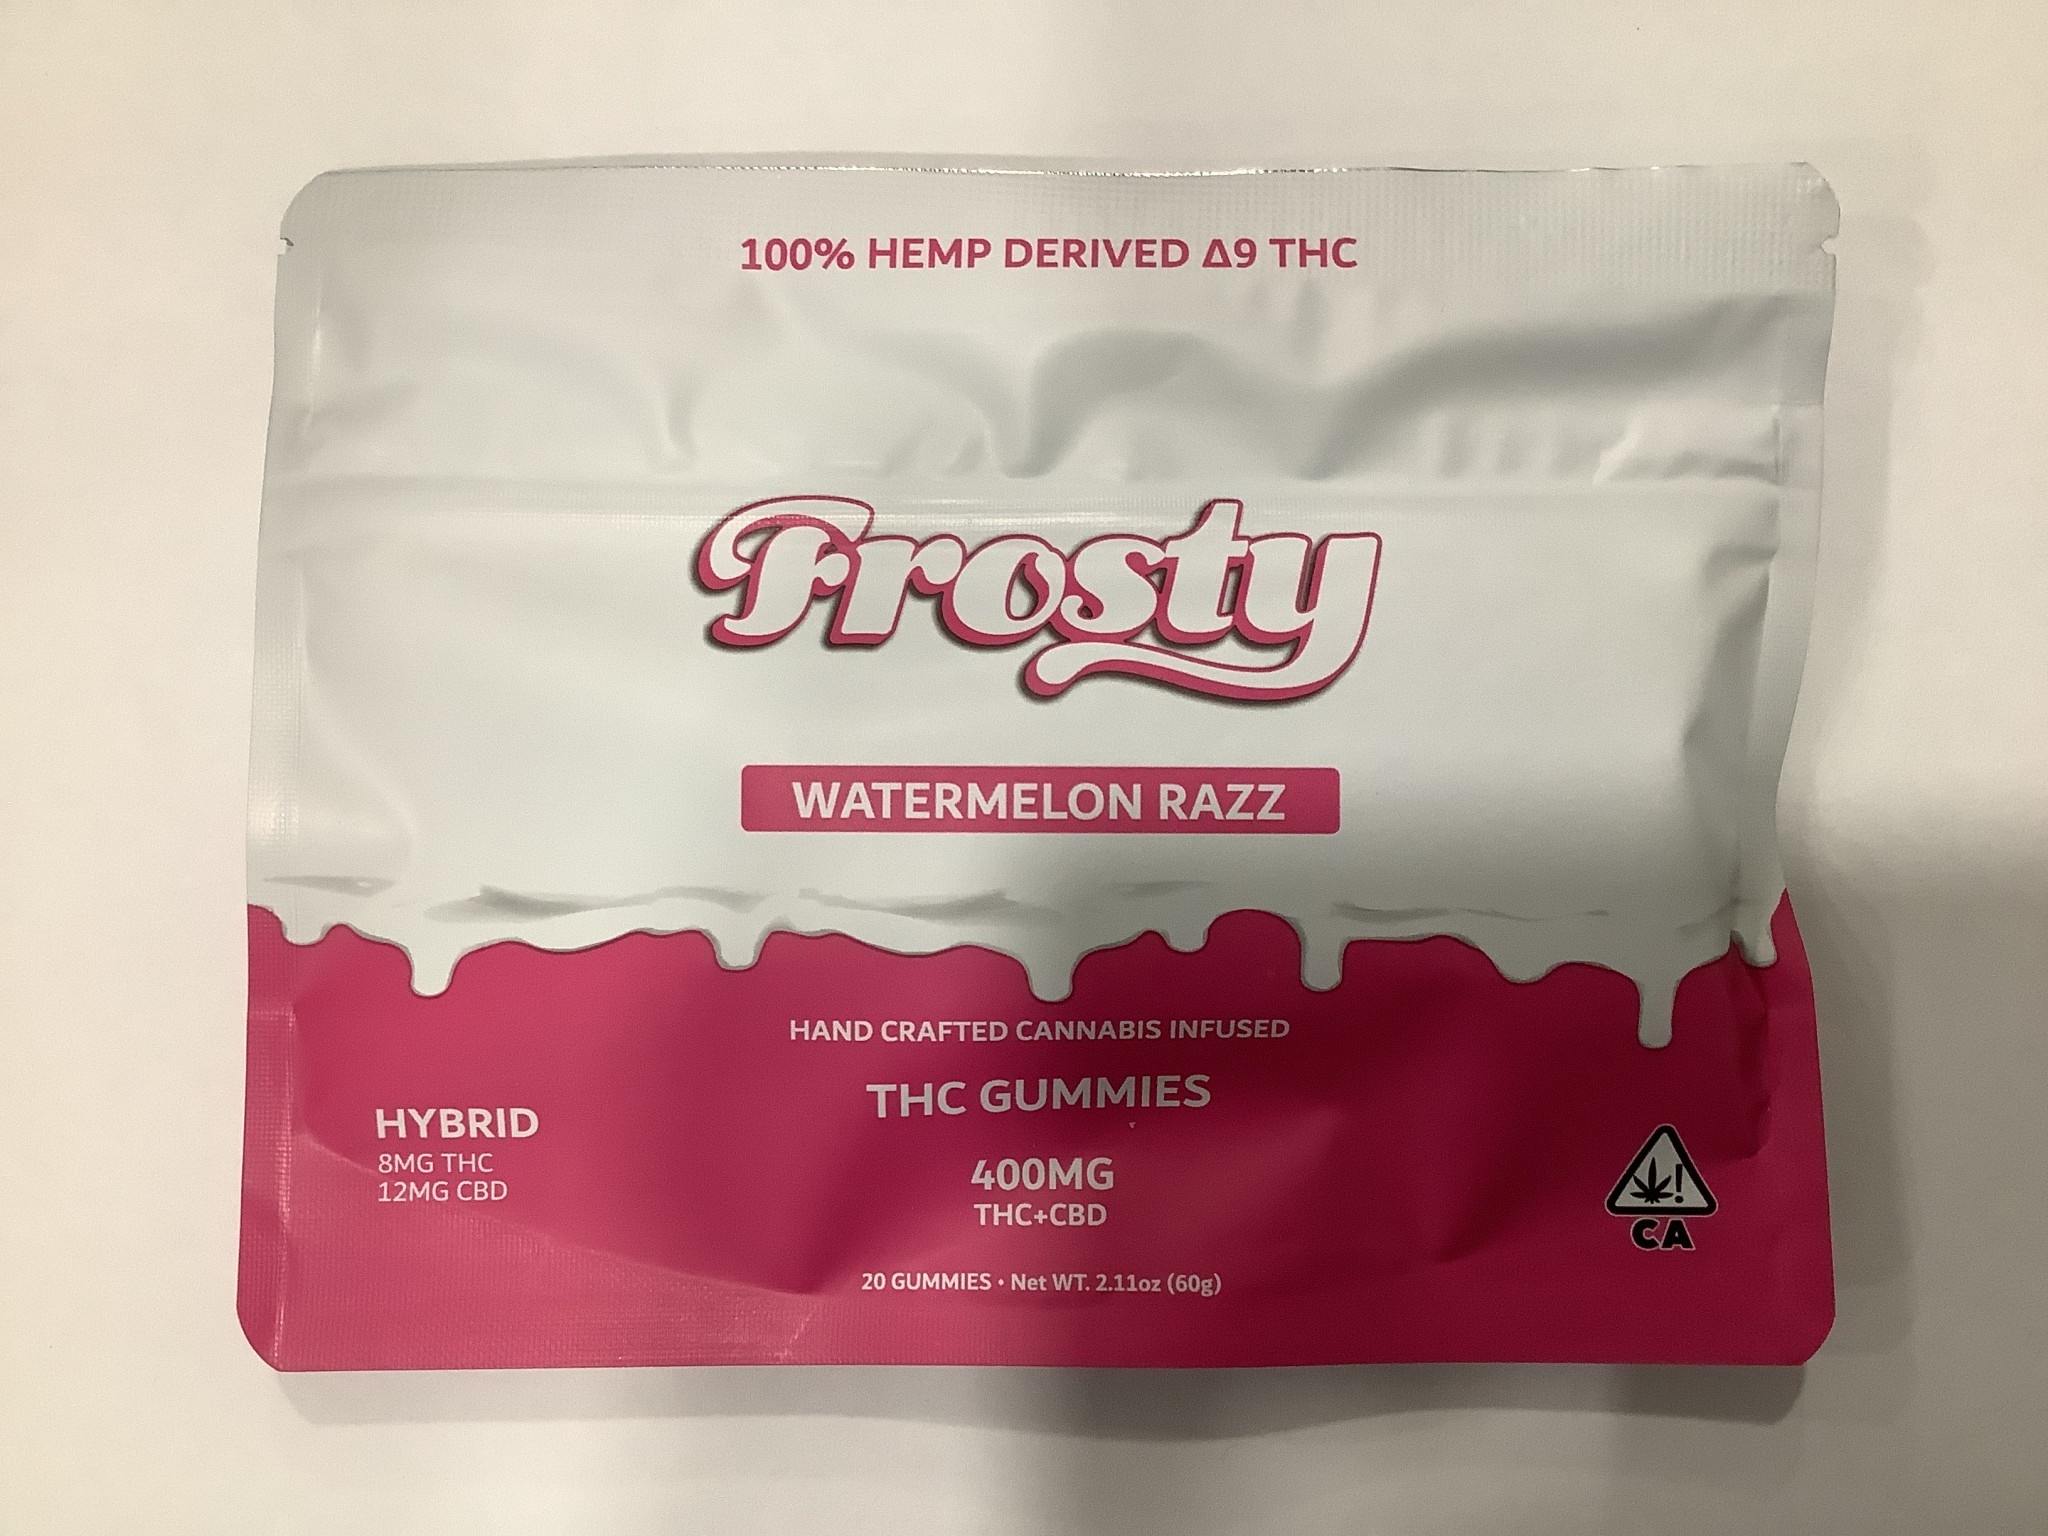 Frosty (8mg THC+12mg CBD) “watermelon razz” (*LDH Approved)